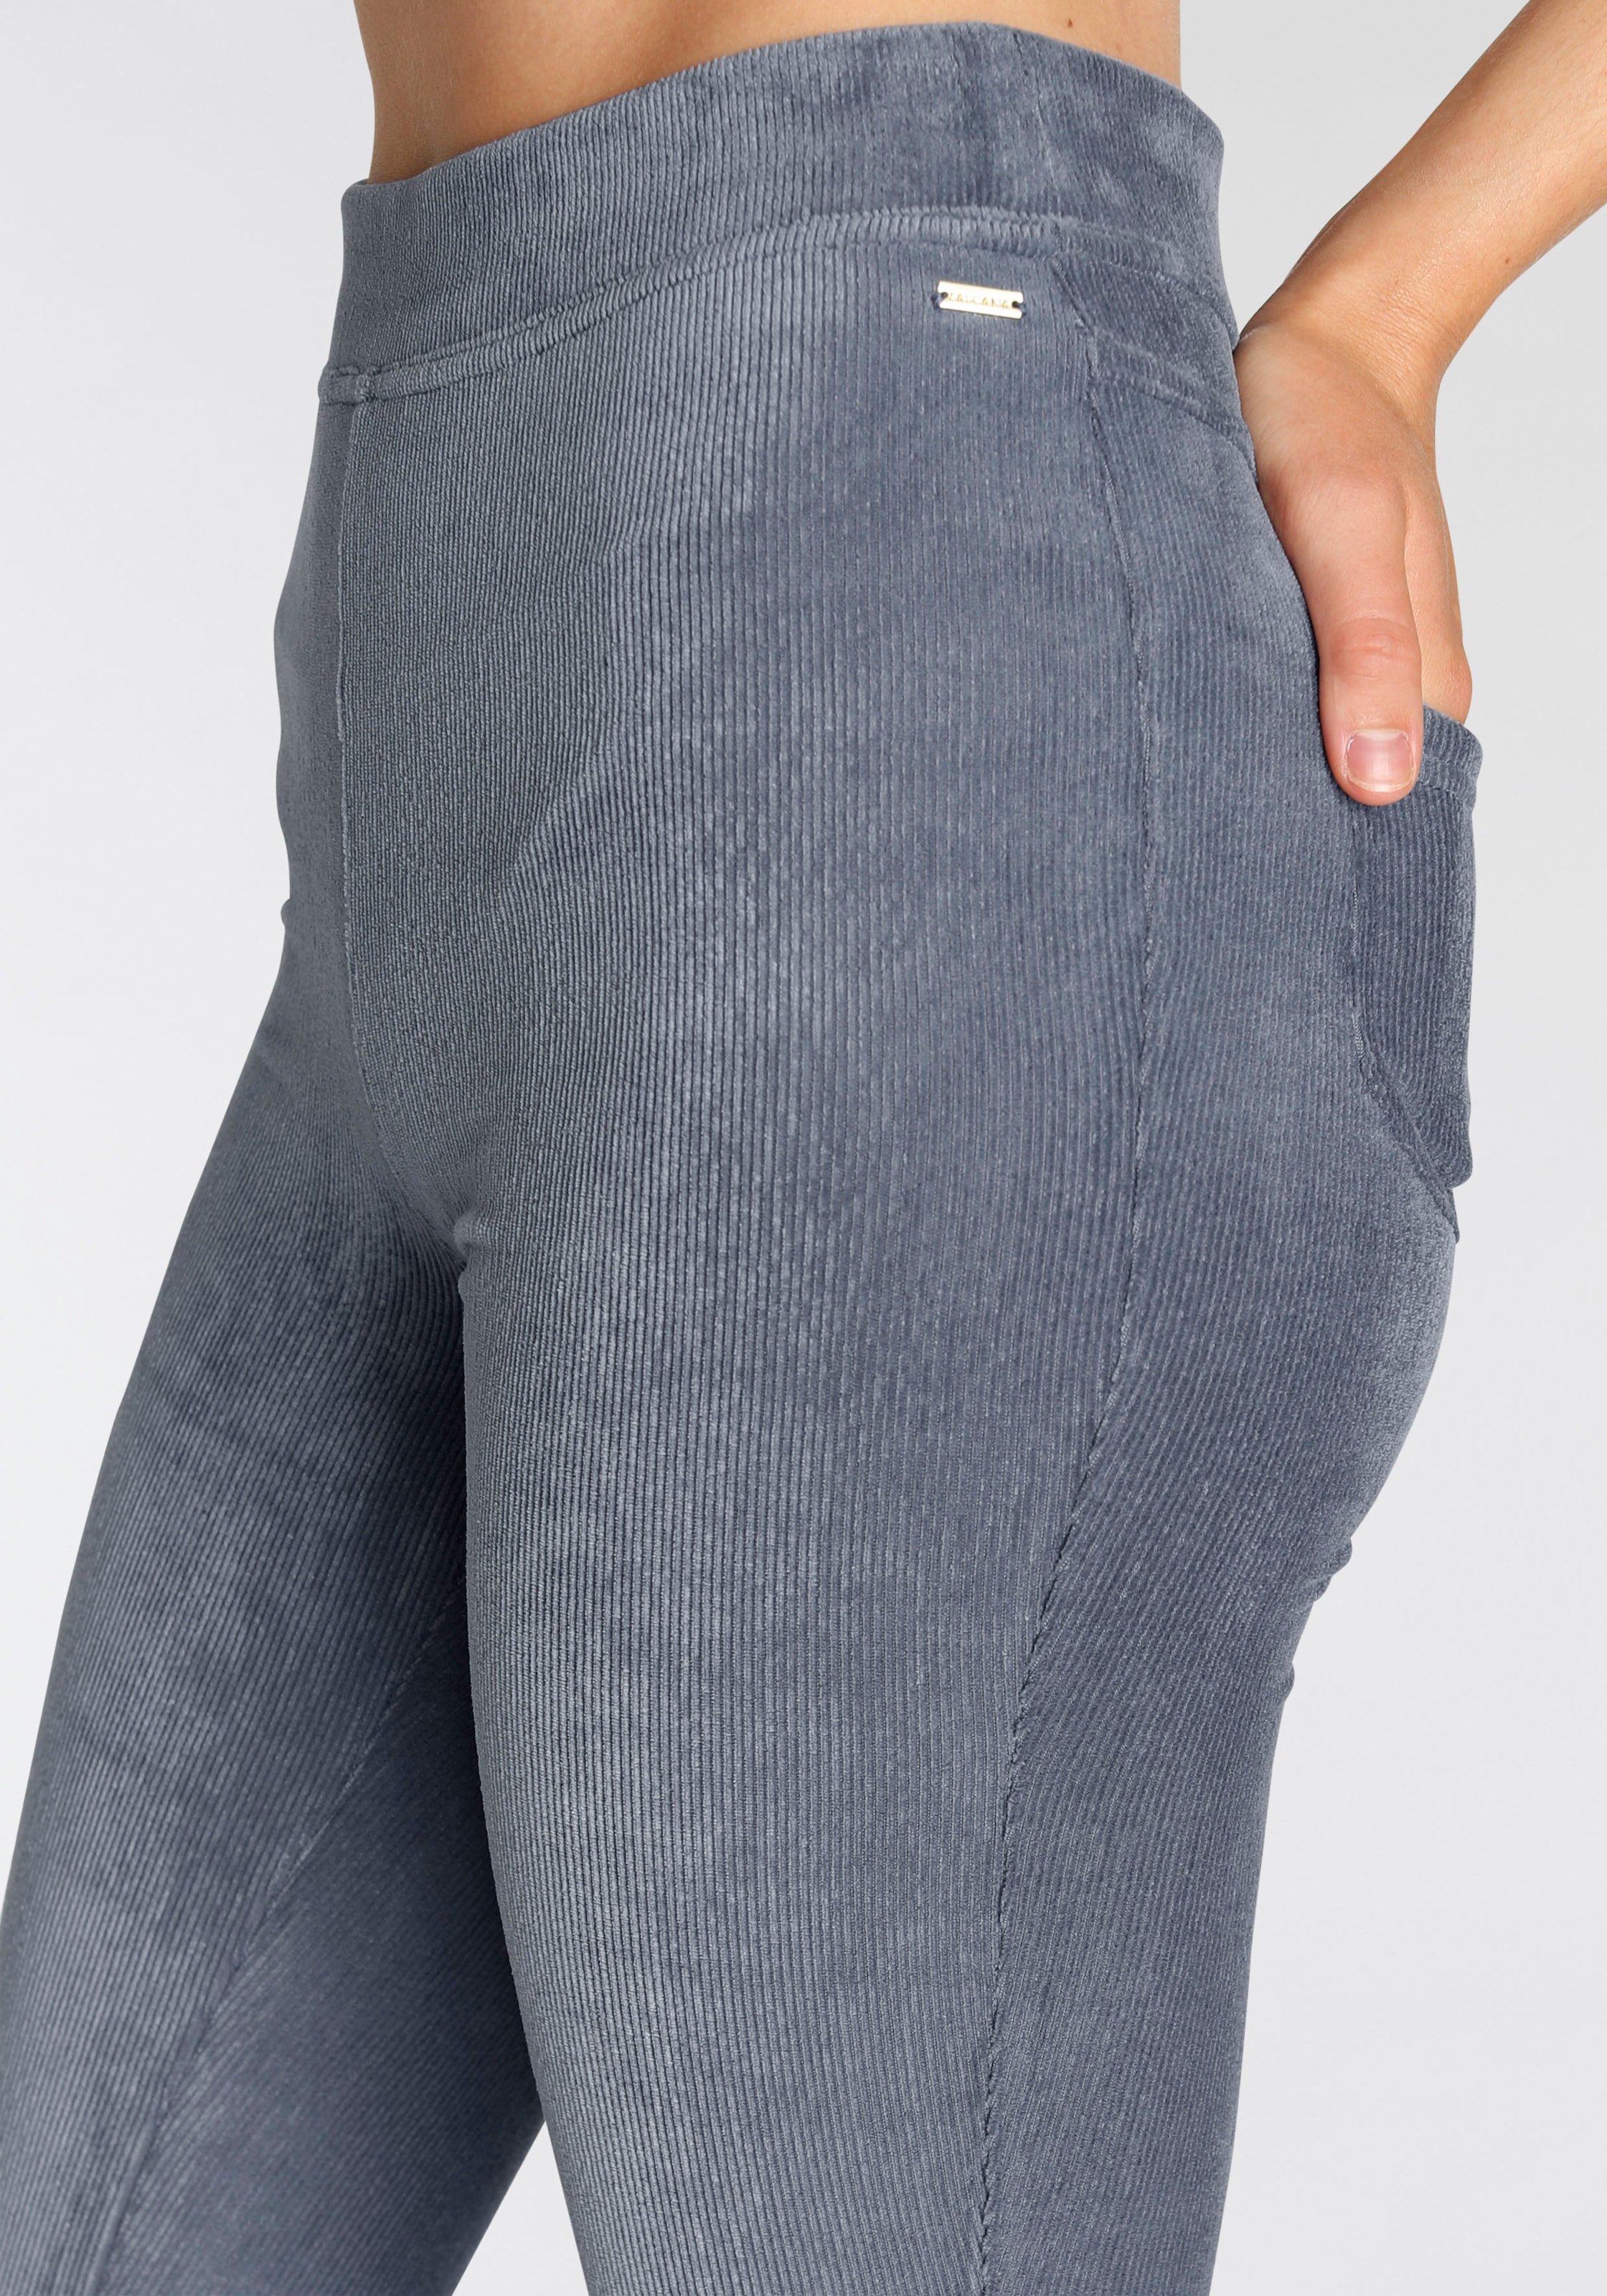 LASCANA Jazzpants, aus weichem Material in bei Cord-Optik, Loungewear ♕